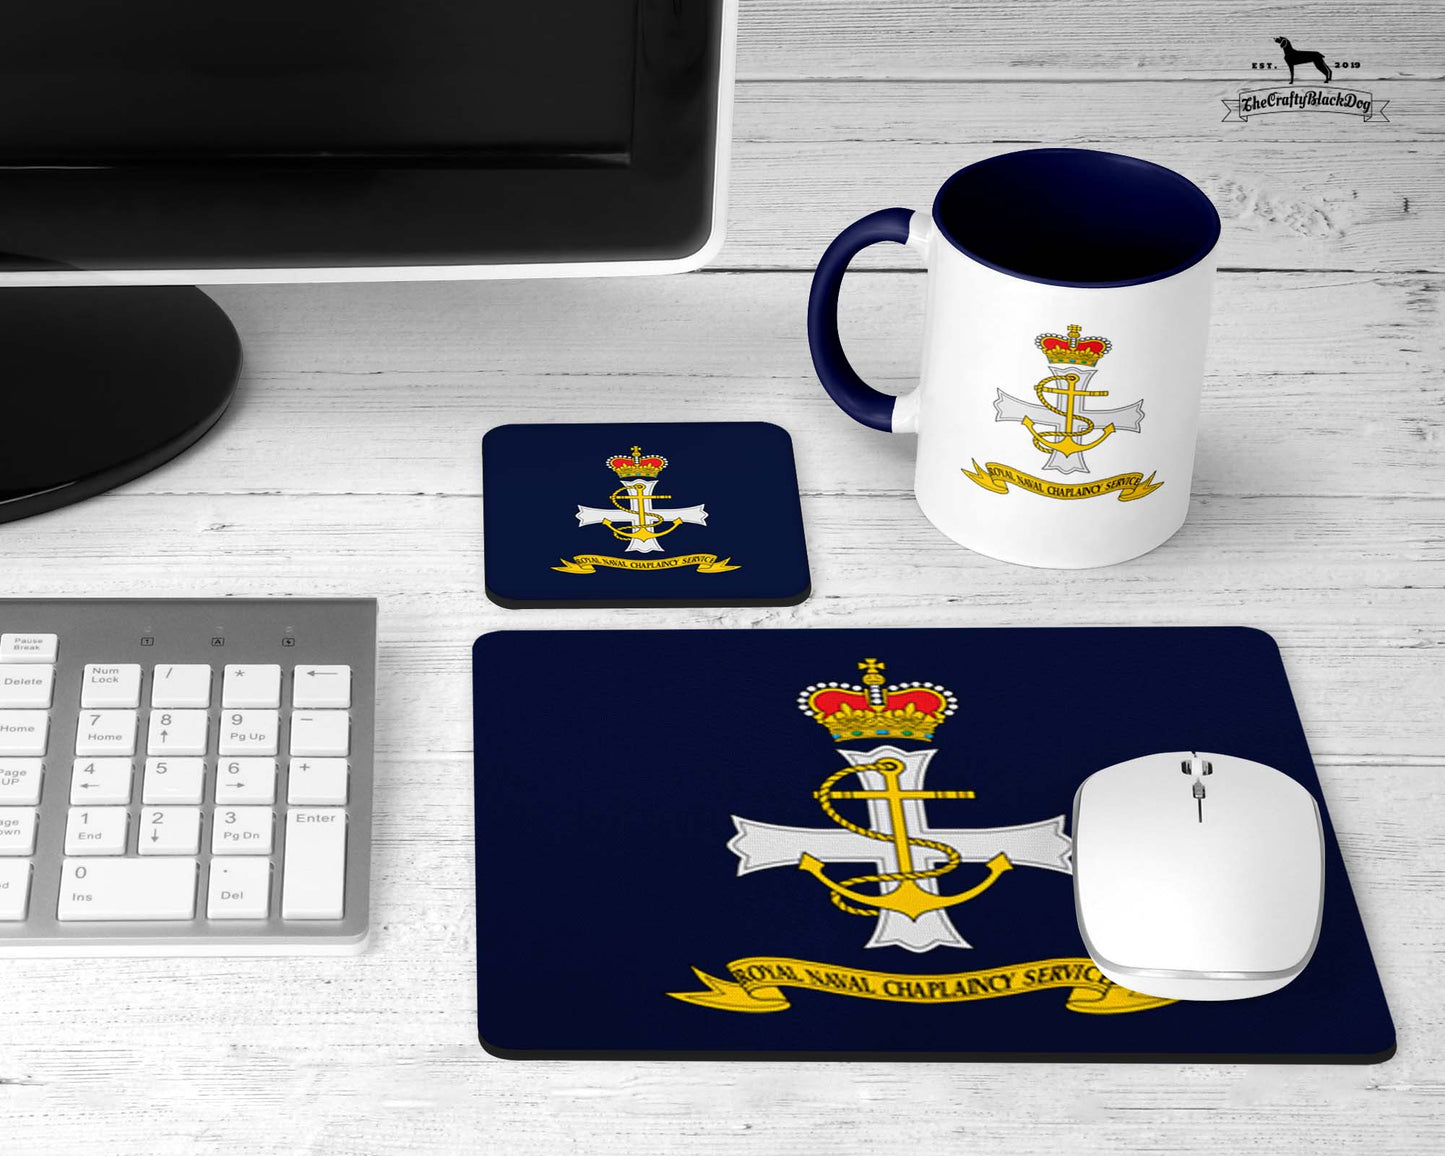 Royal Naval Chaplaincy Service - Office Set